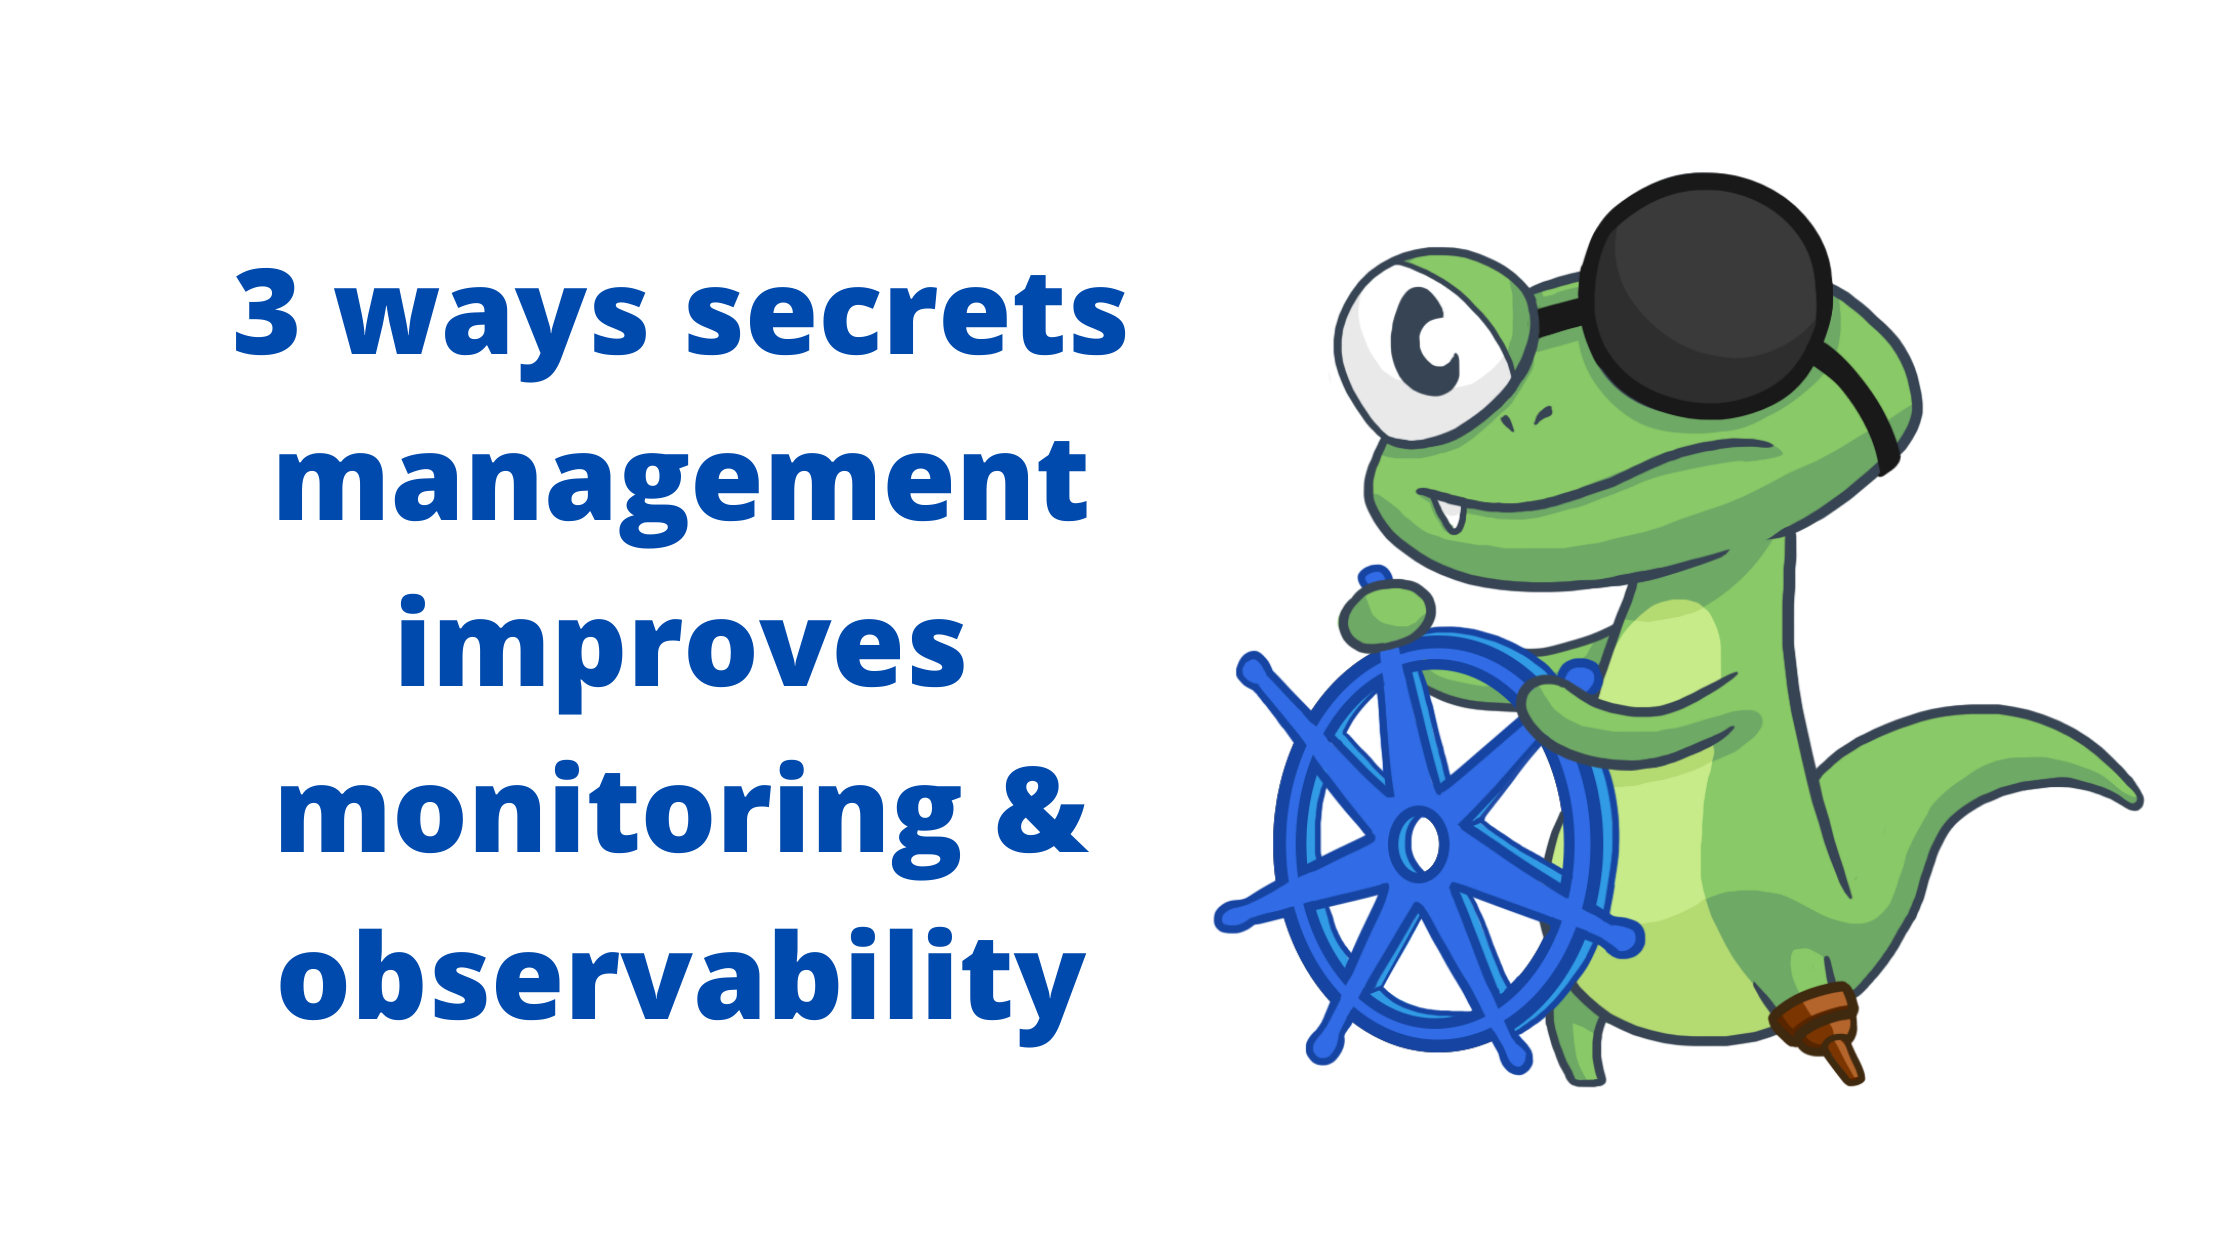 3 ways secrets management improves monitoring & observability